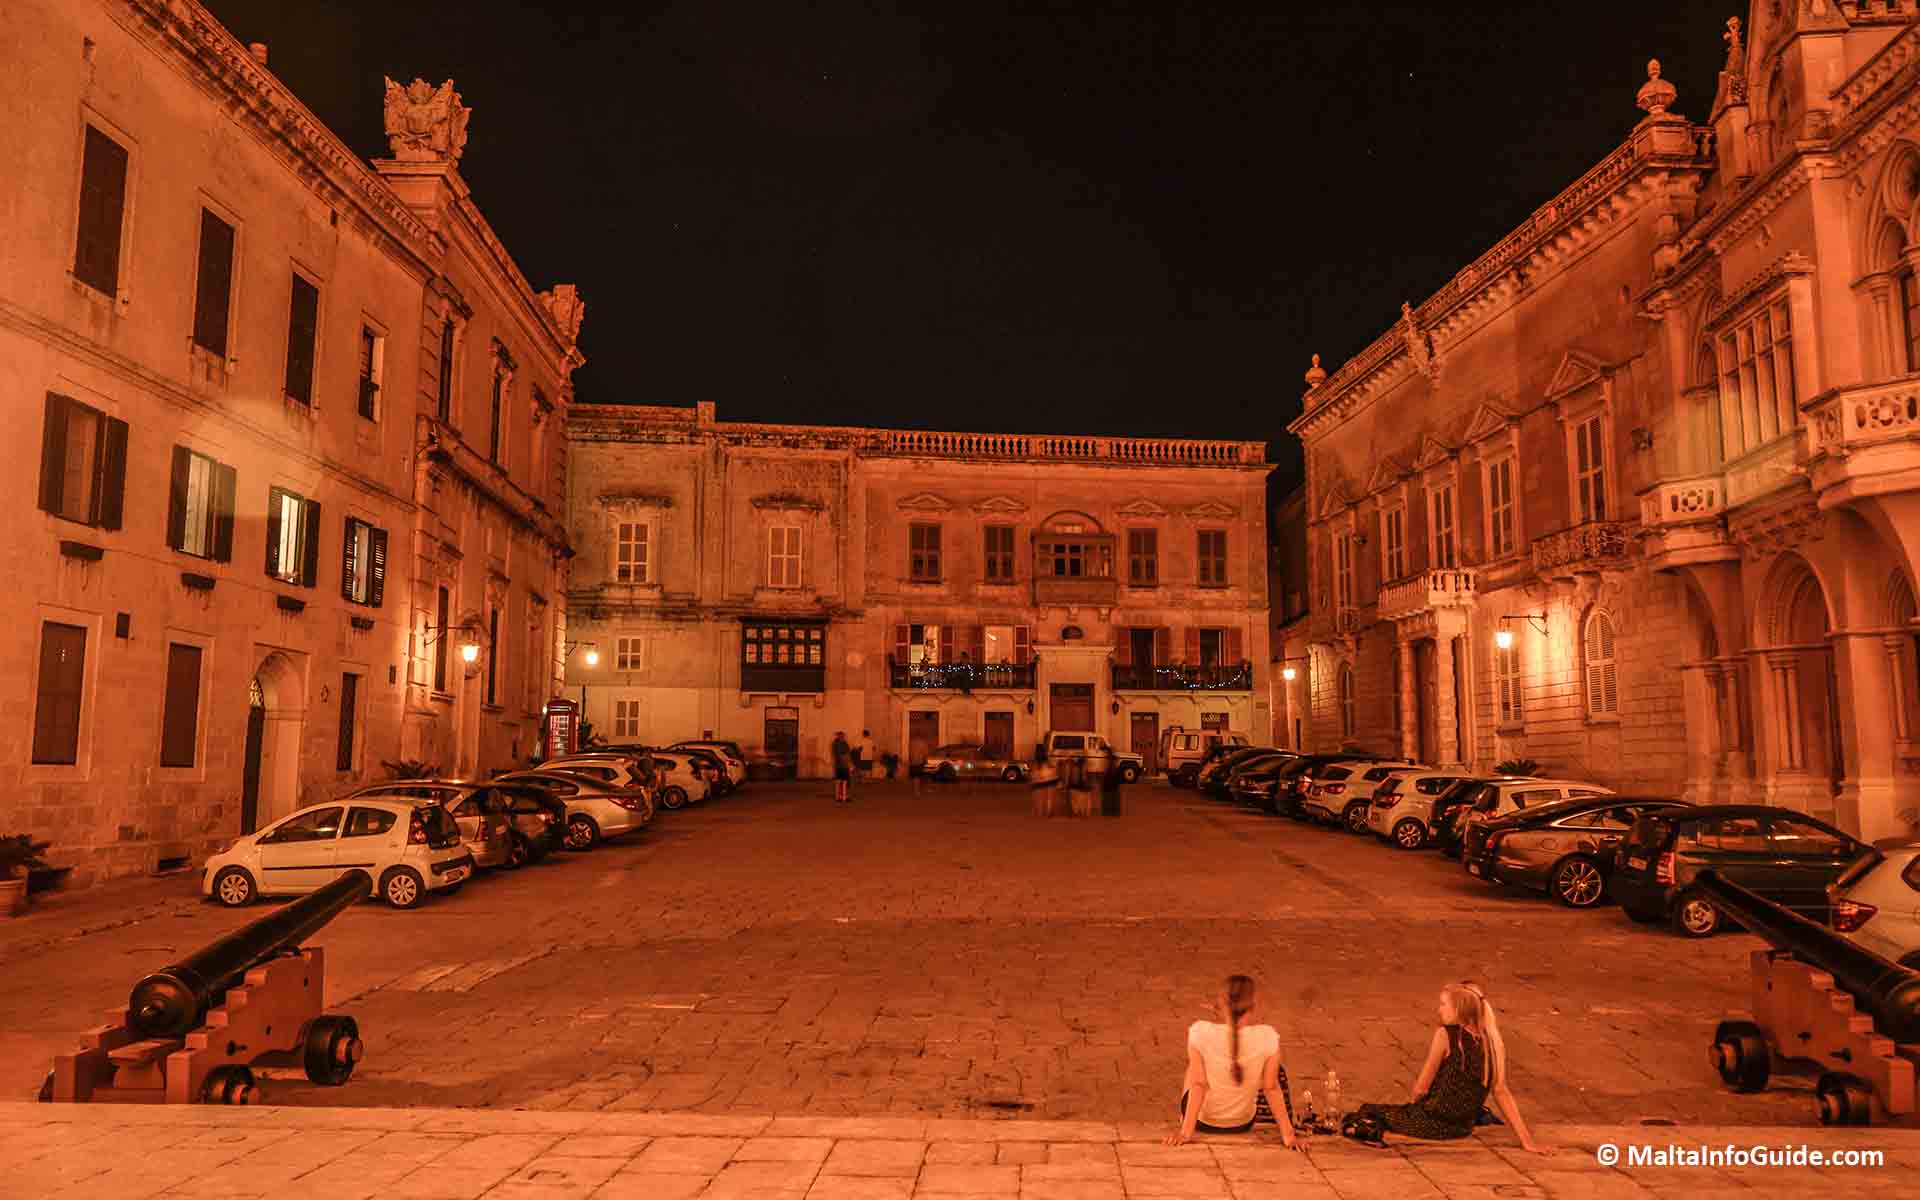 Mdina by night at the main square.